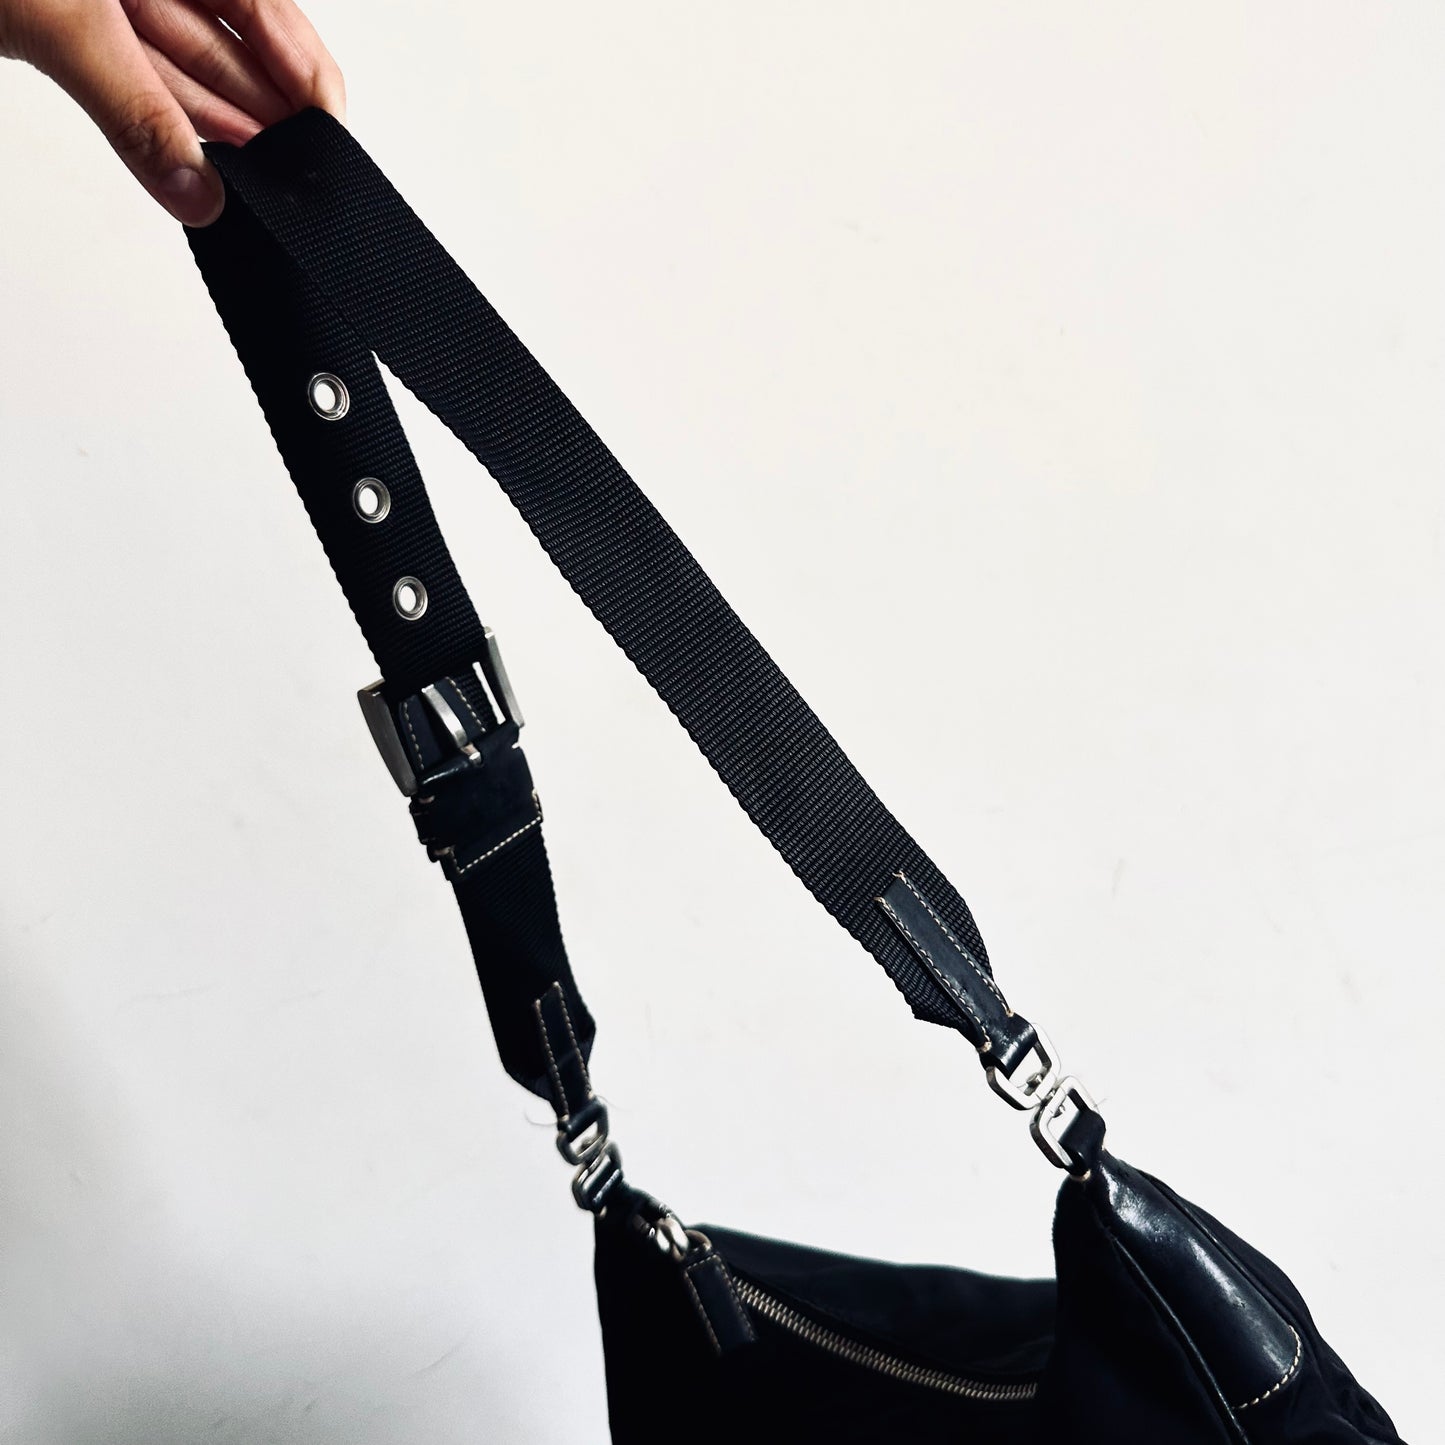 Prada Black Tessuto Monogram Logo Hobo Baguette Shoulder Sling Bag